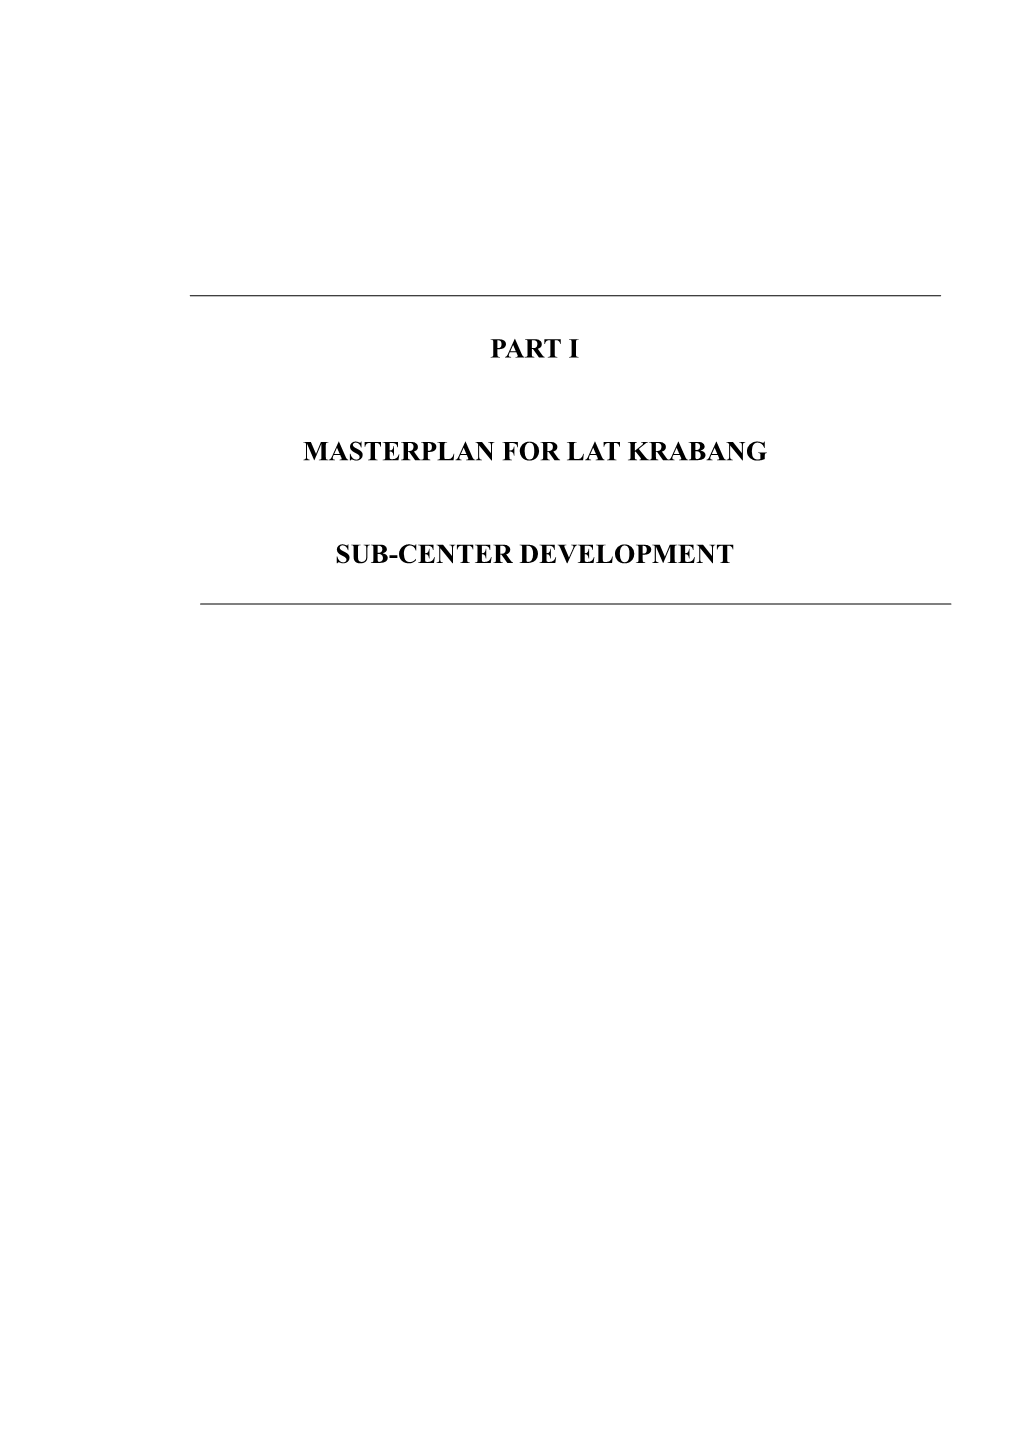 Part I Masterplan for Lat Krabang Sub-Center